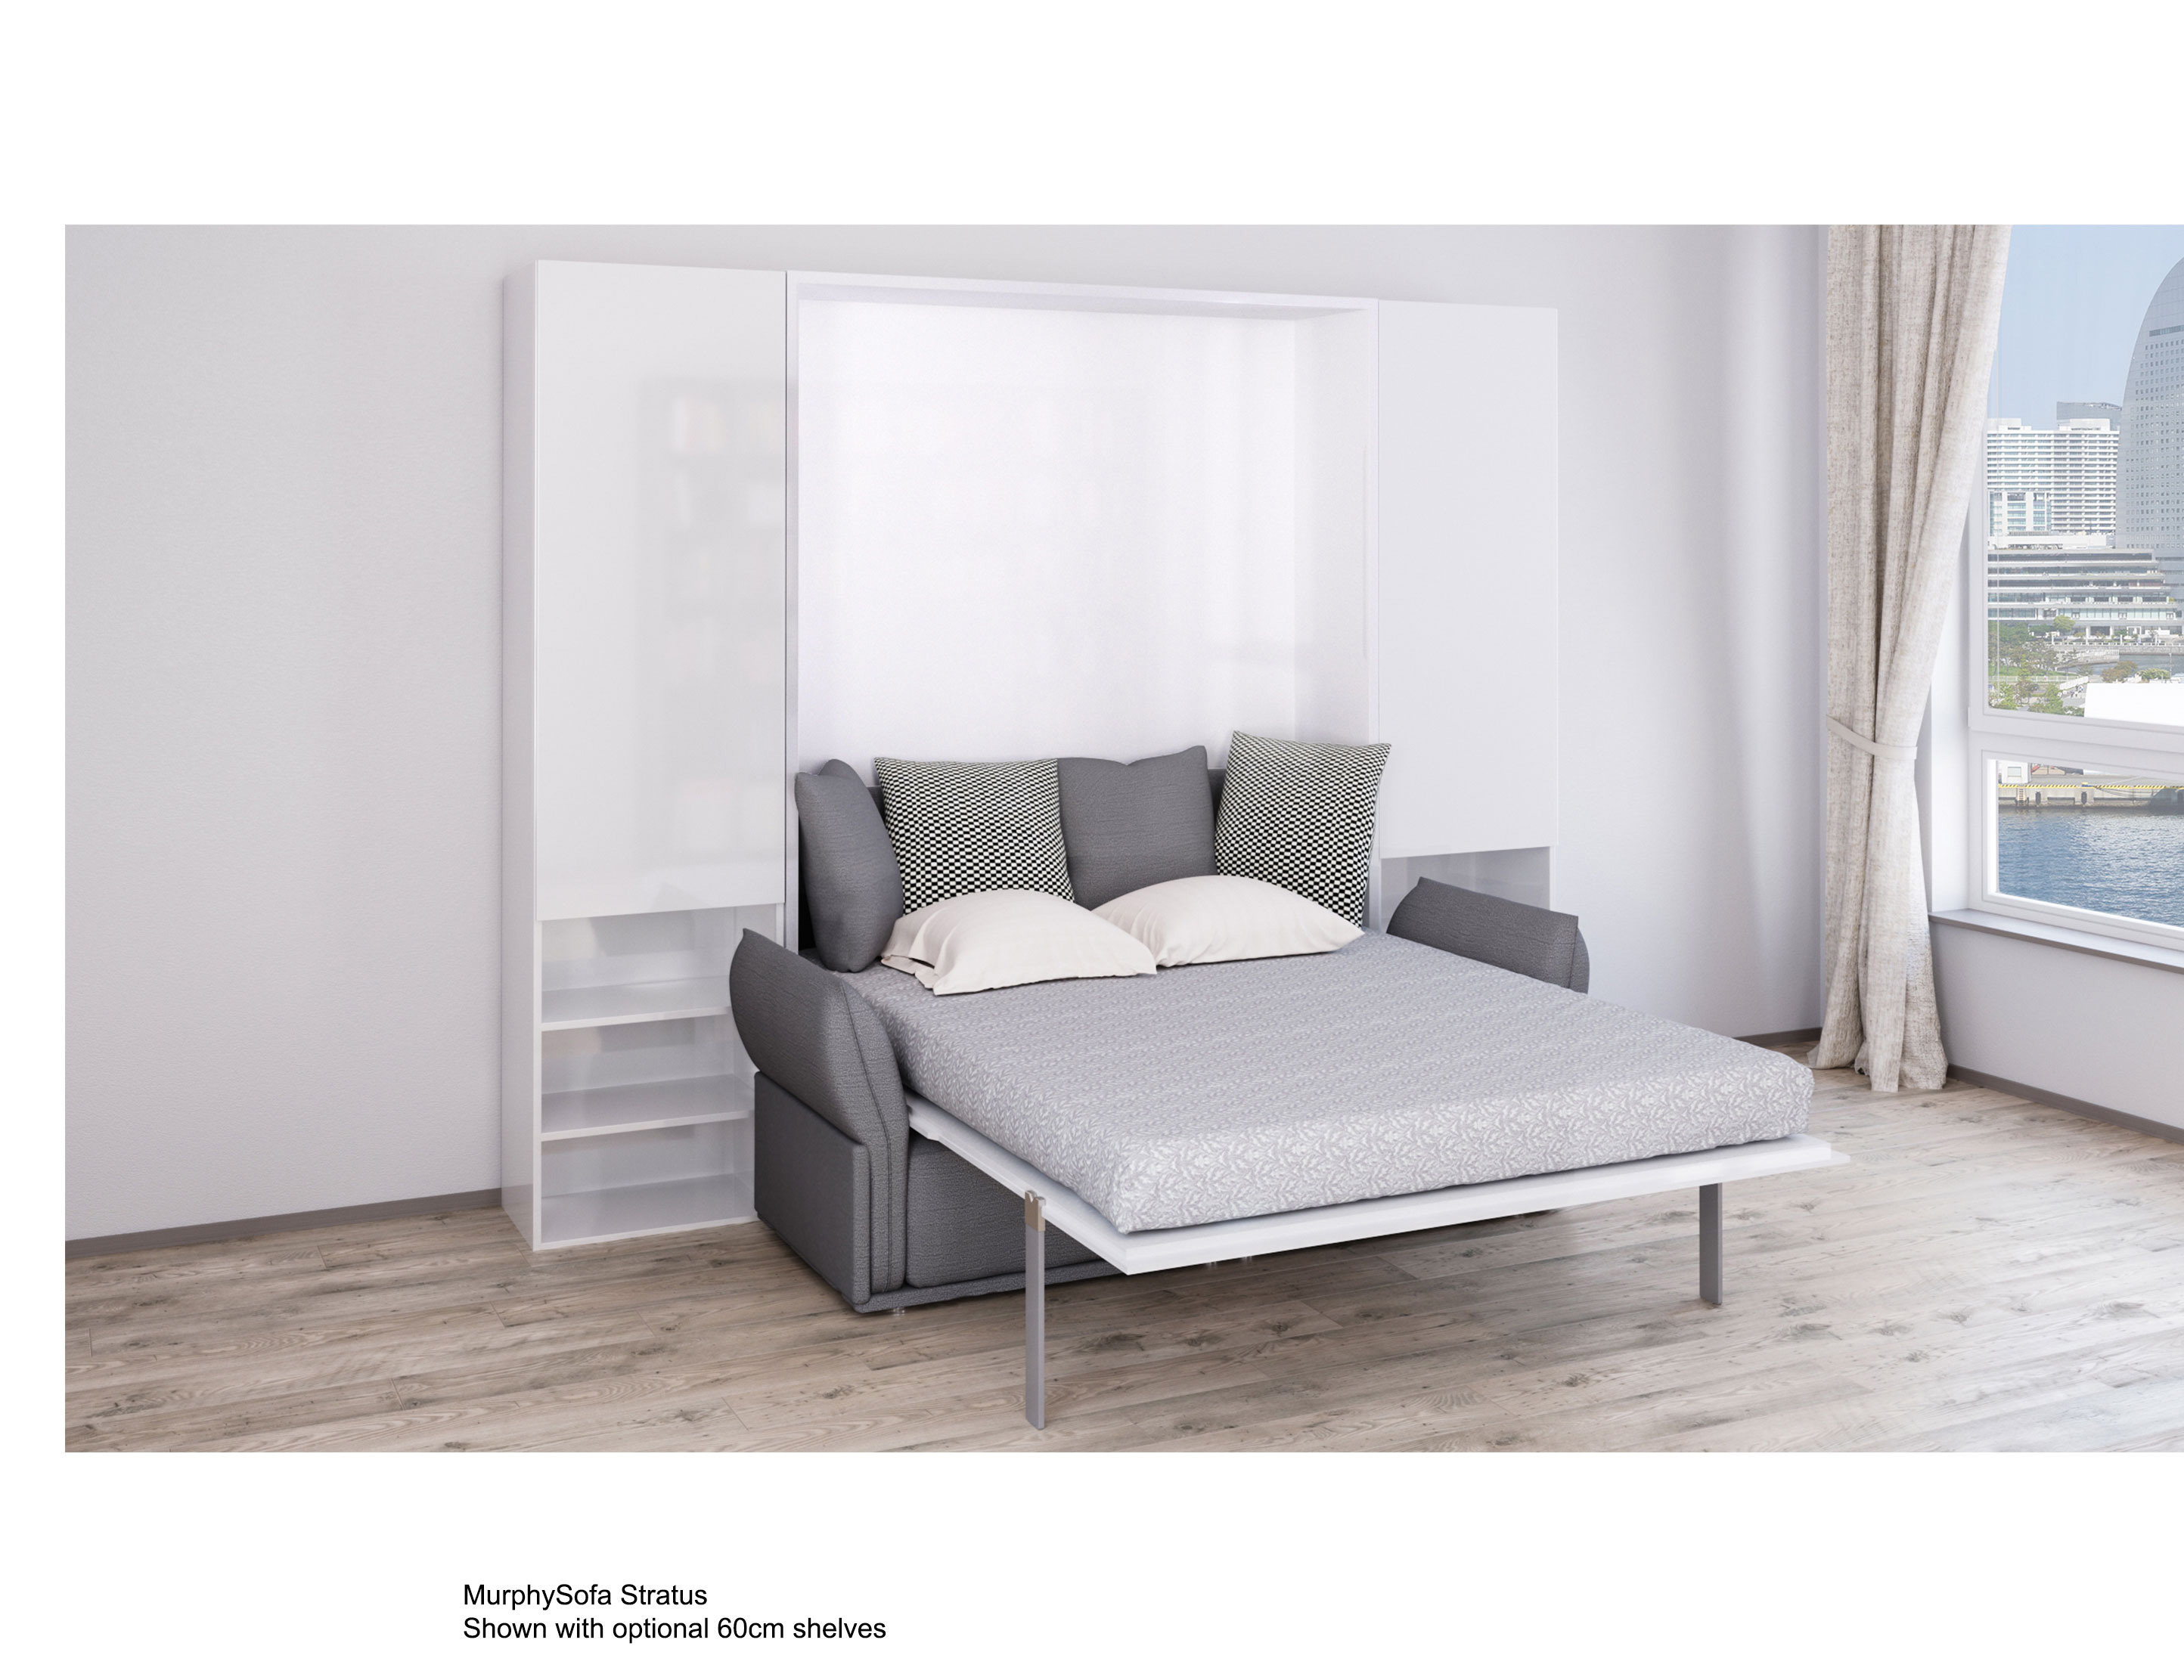 innova sofa wall bed price